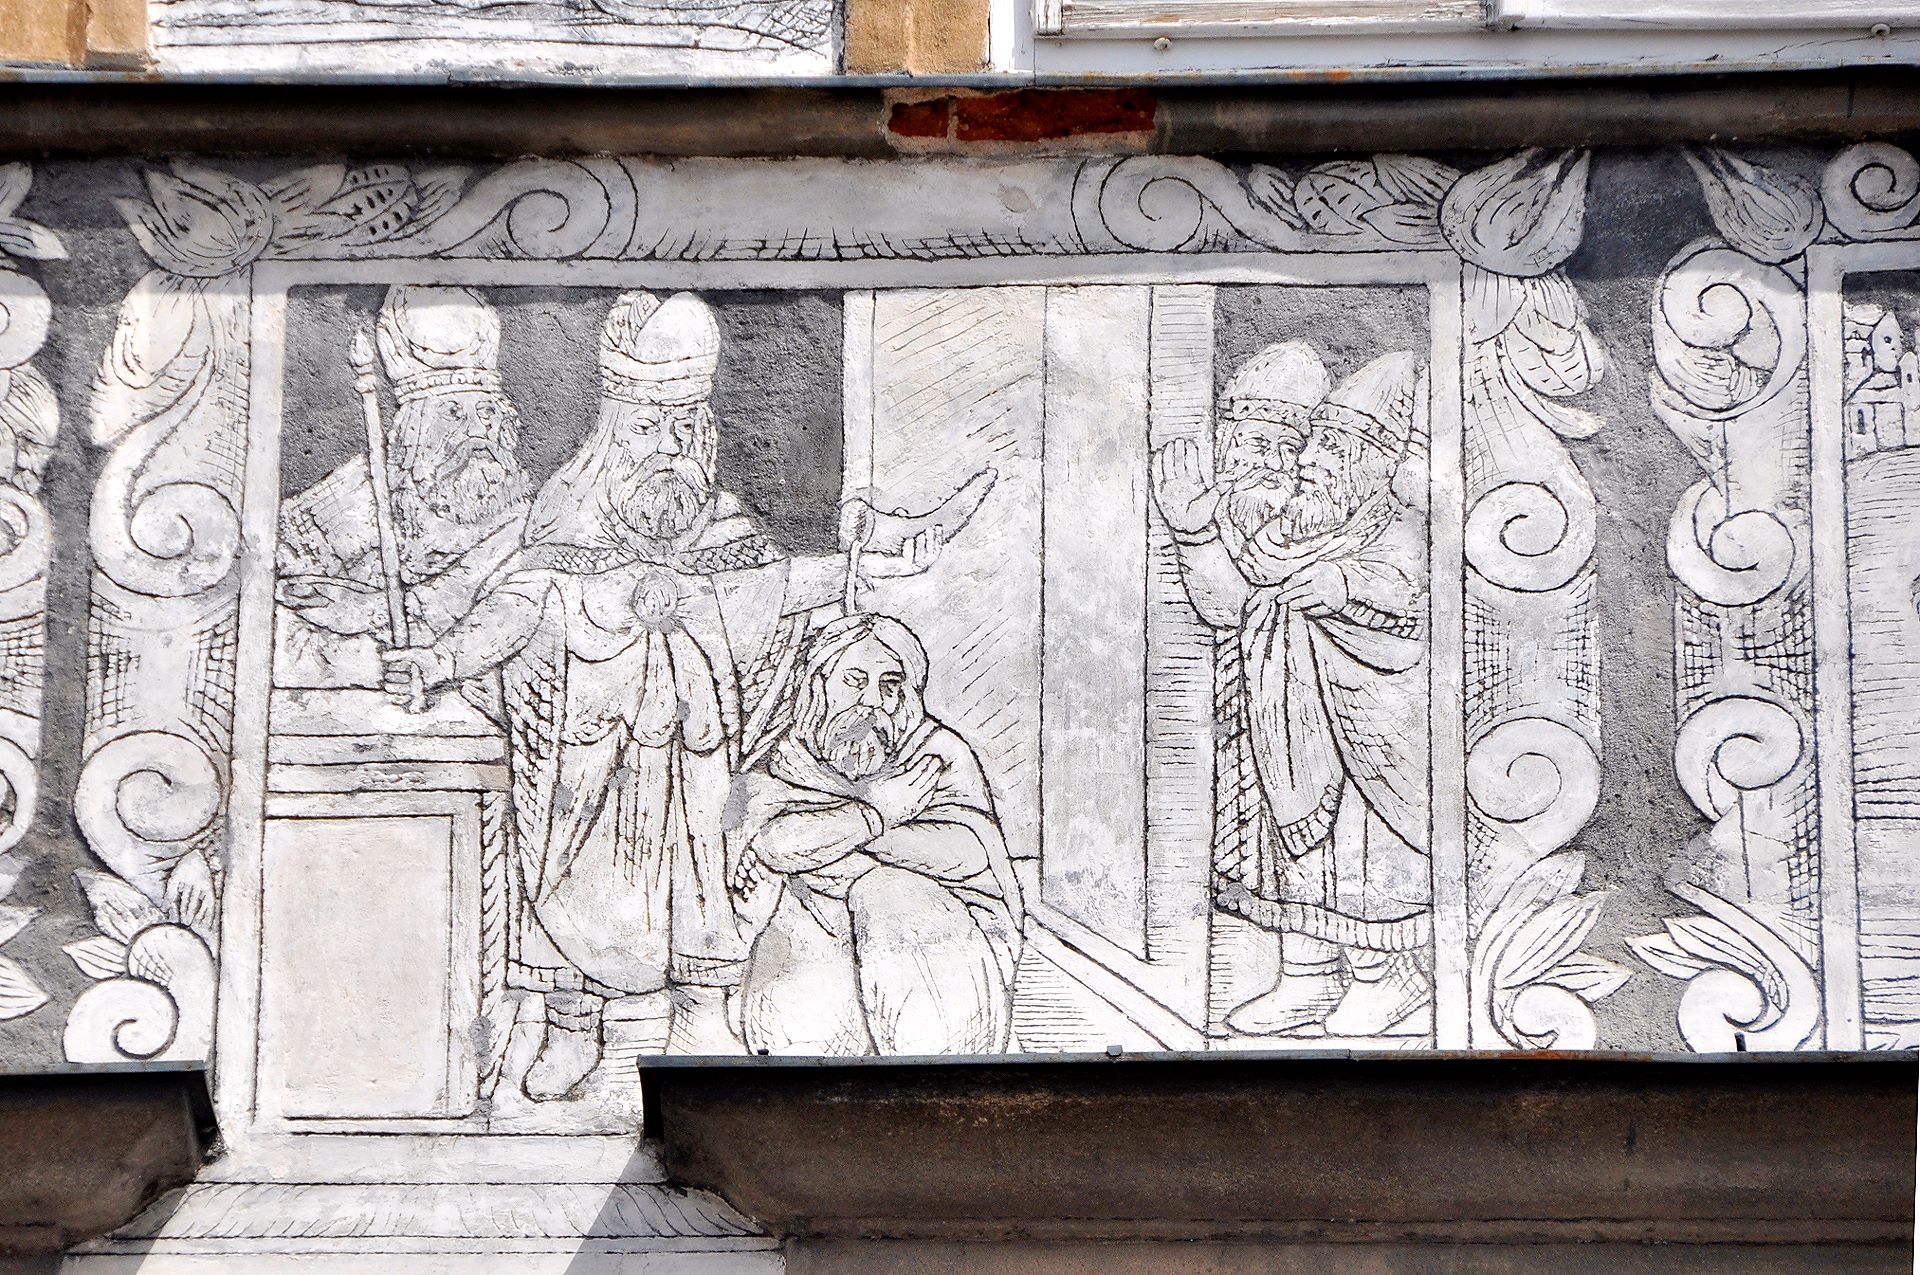 Langers Haus mit Renaissancesgraffiti Szenen aus dem Alten Testament darstellend